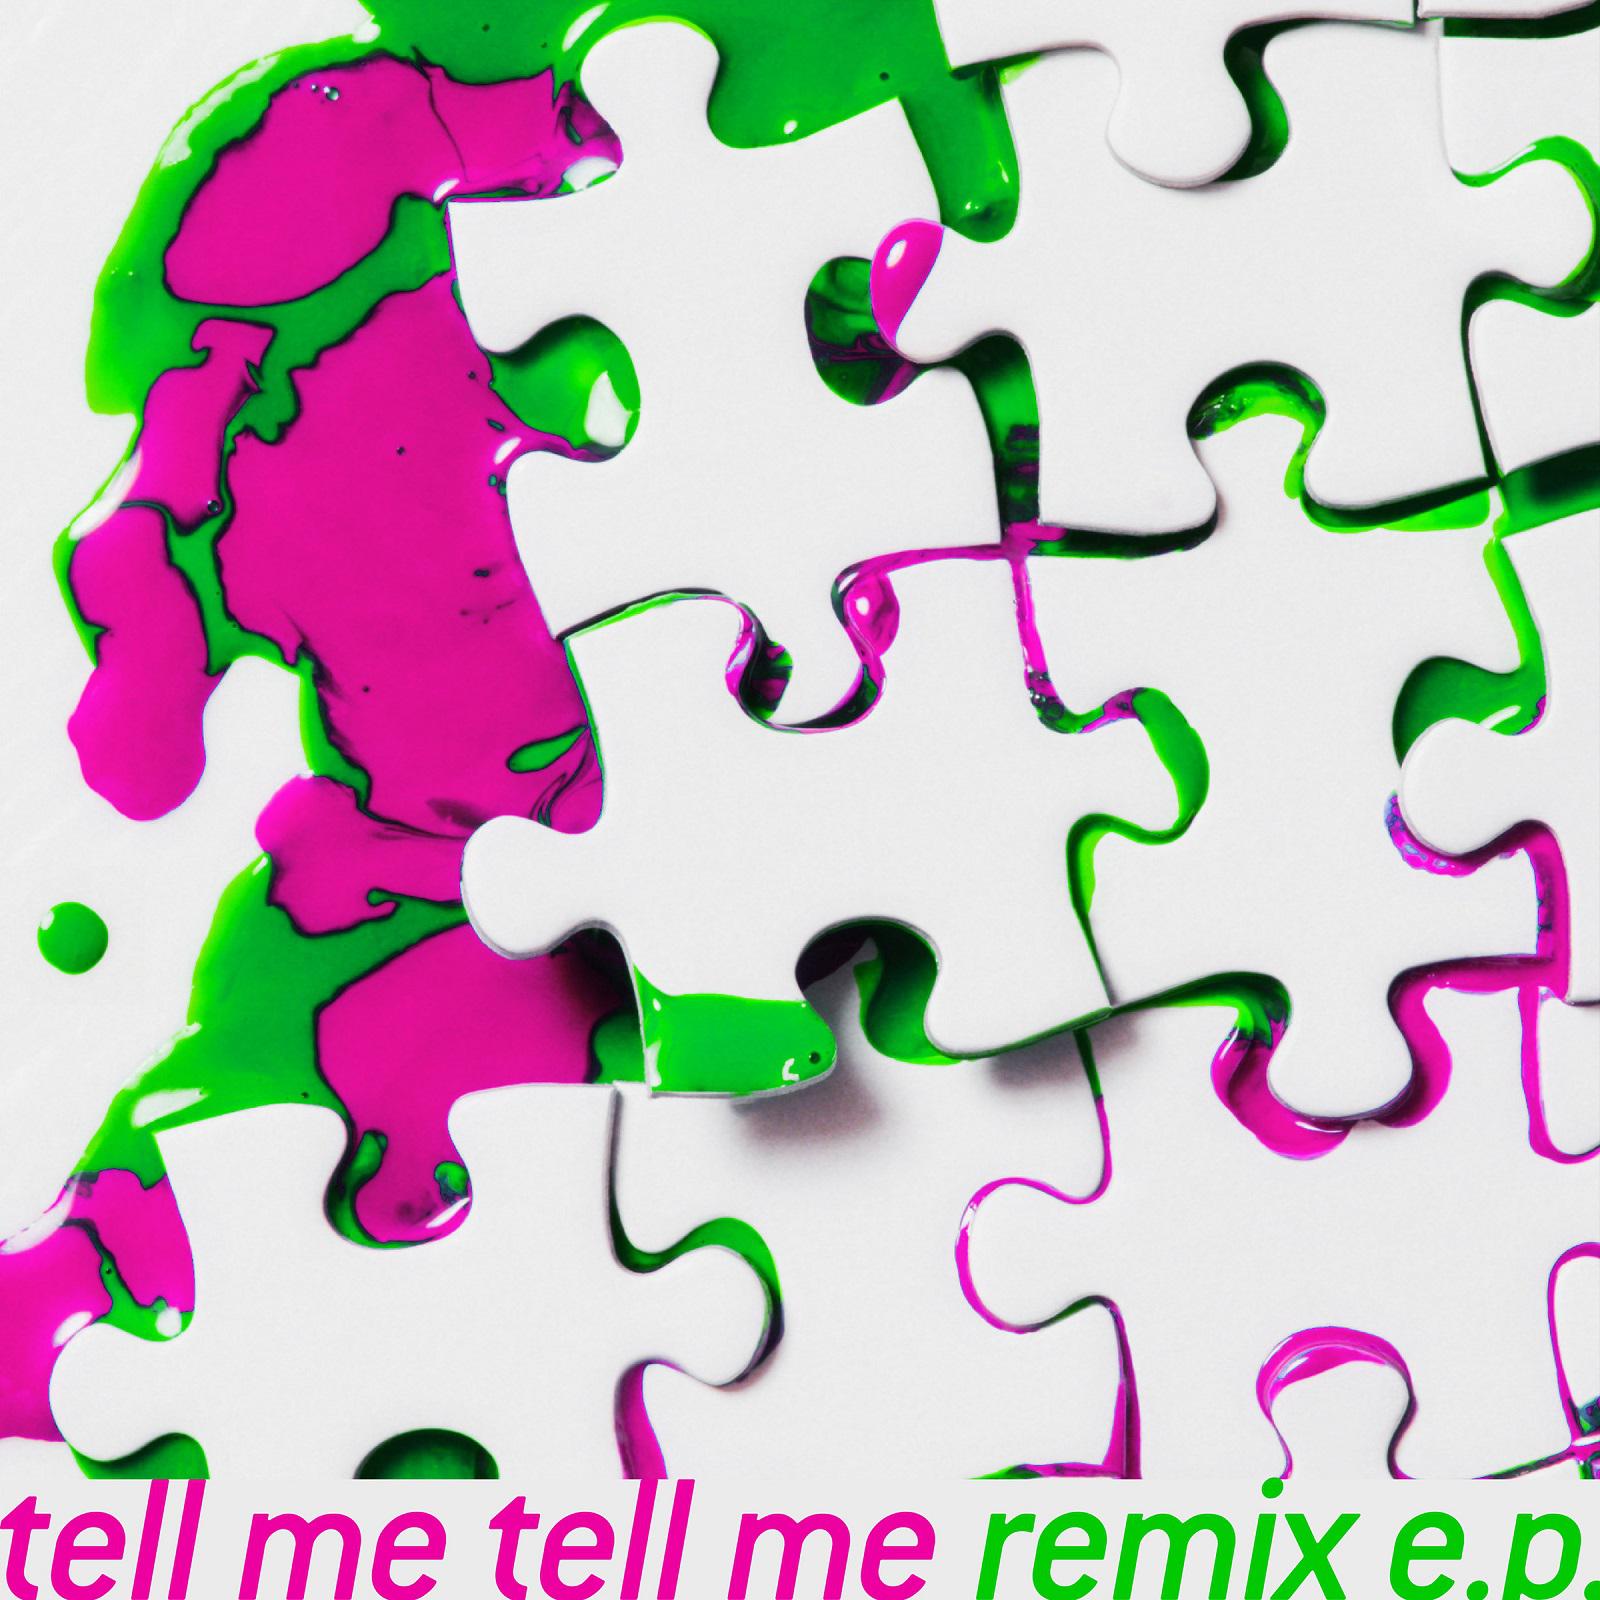 tell me tell me kamome sano remix歌词 歌手m-flo / Sik-K / eill / 向井太一-专辑tell me tell me remix e.p.-单曲《tell me tell me kamome sano remix》LRC歌词下载